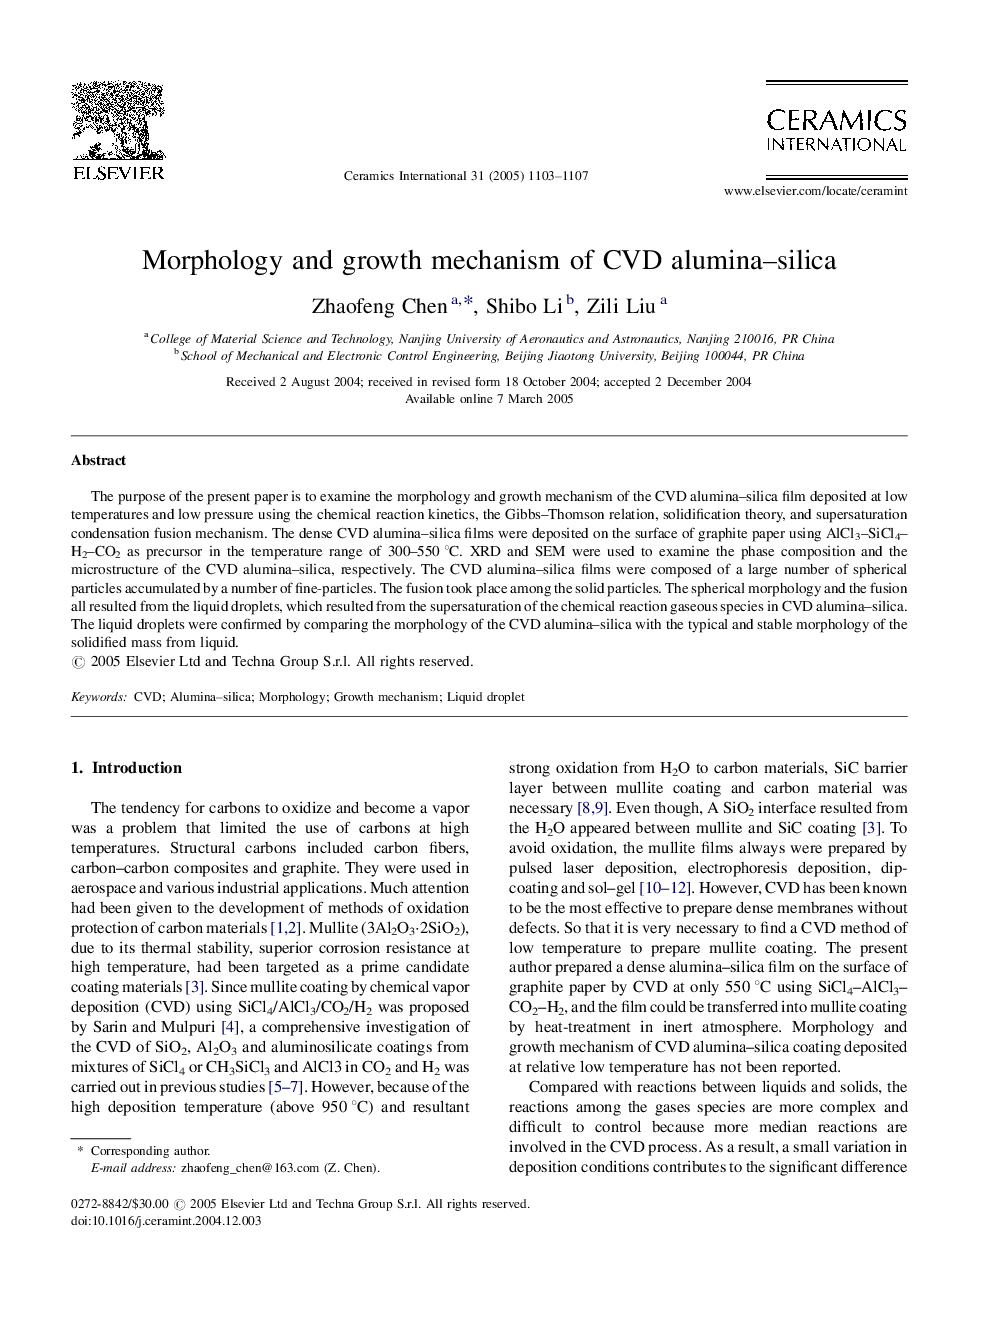 Morphology and growth mechanism of CVD alumina-silica